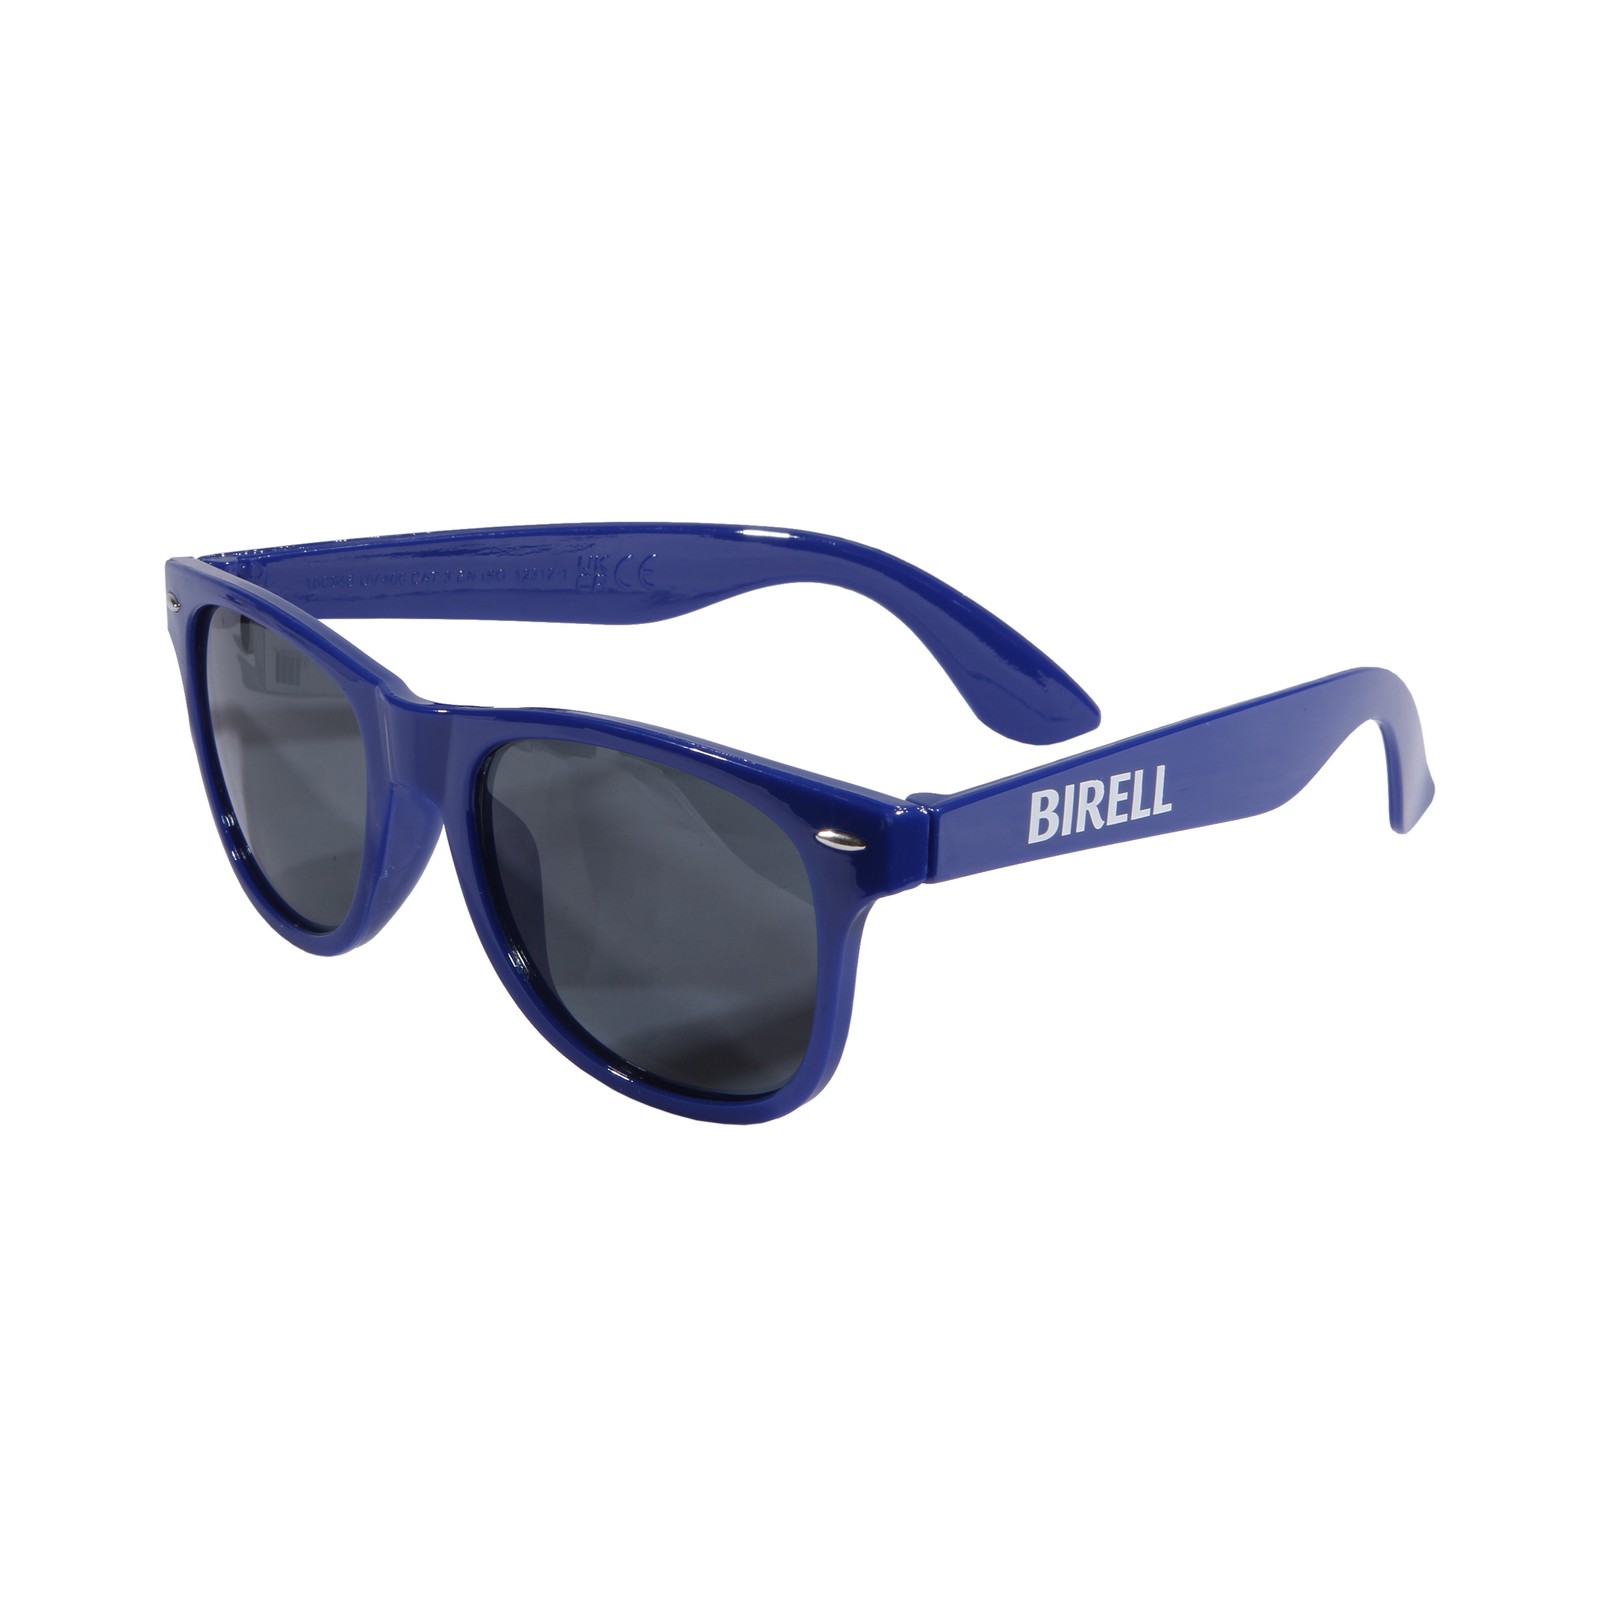 Birell Sunglasses